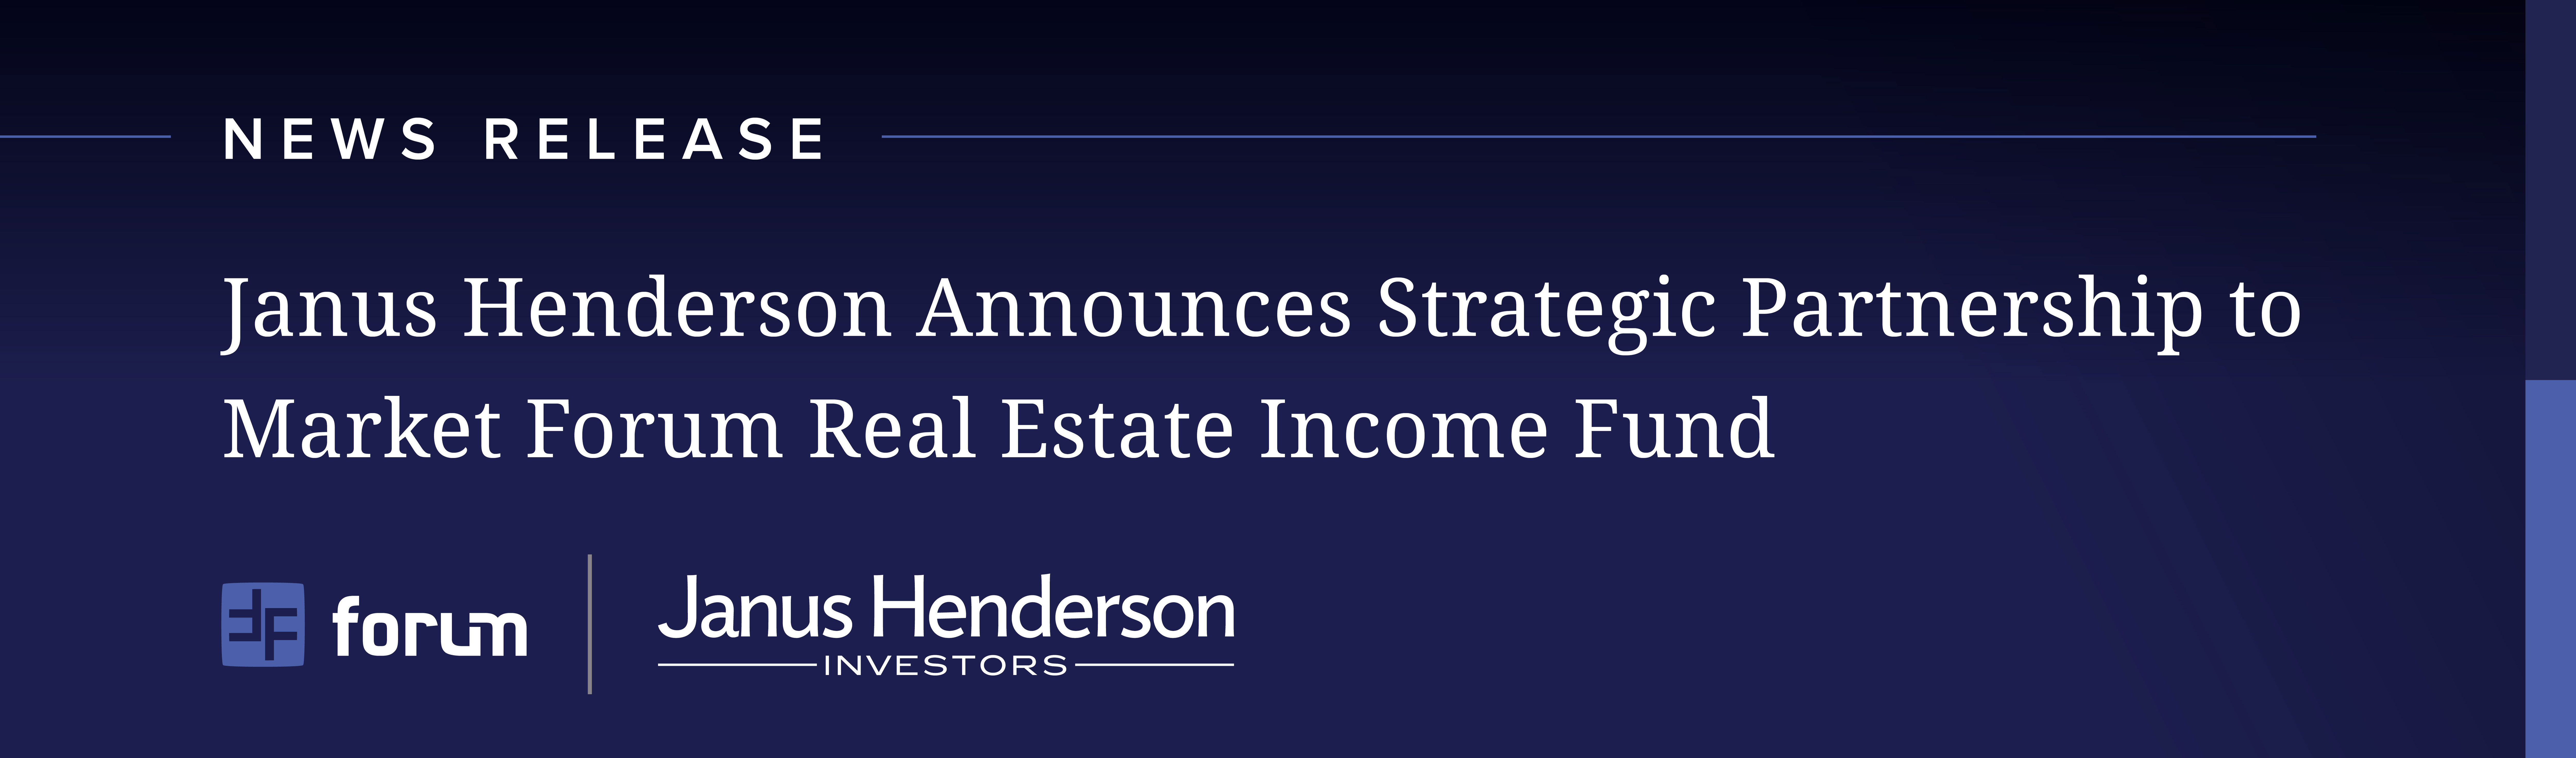 Janus Henderson Announces Strategic Partnership to Market Forum Real Estate Income Fund